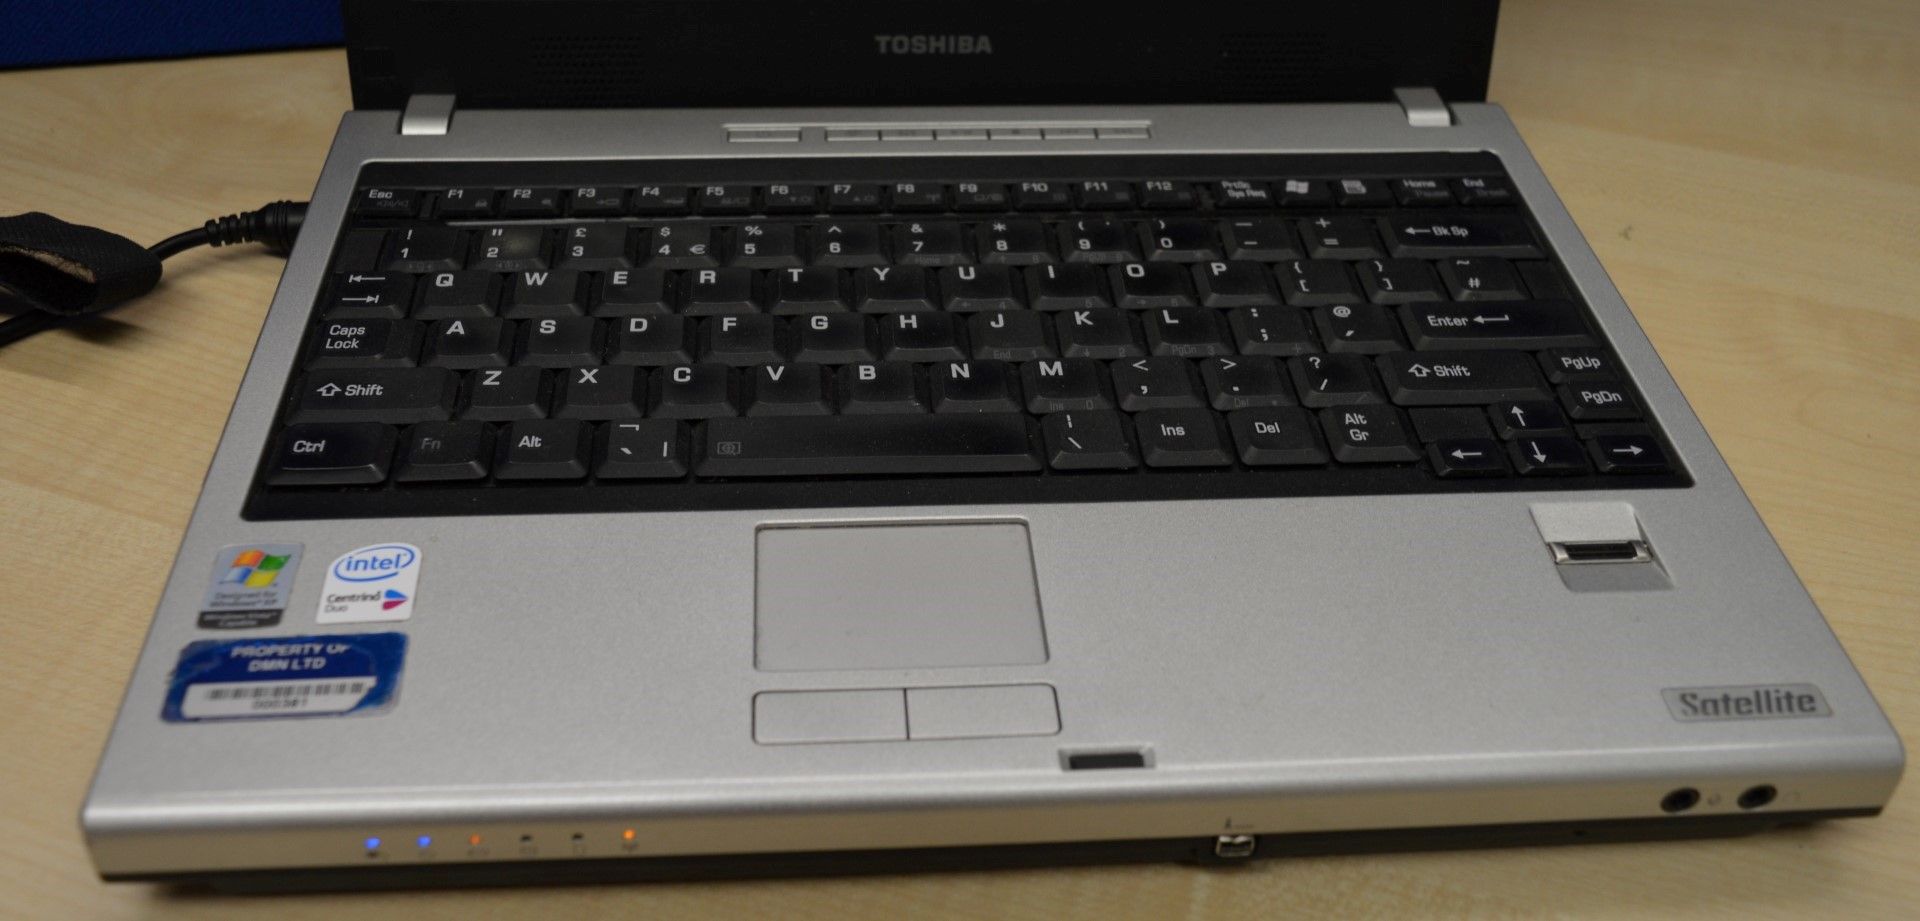 1 x Toshiba U200 Laptop Computer - 12.1 Inch Screen Size - Features Intel Centrino Duo Processor, - Image 2 of 7